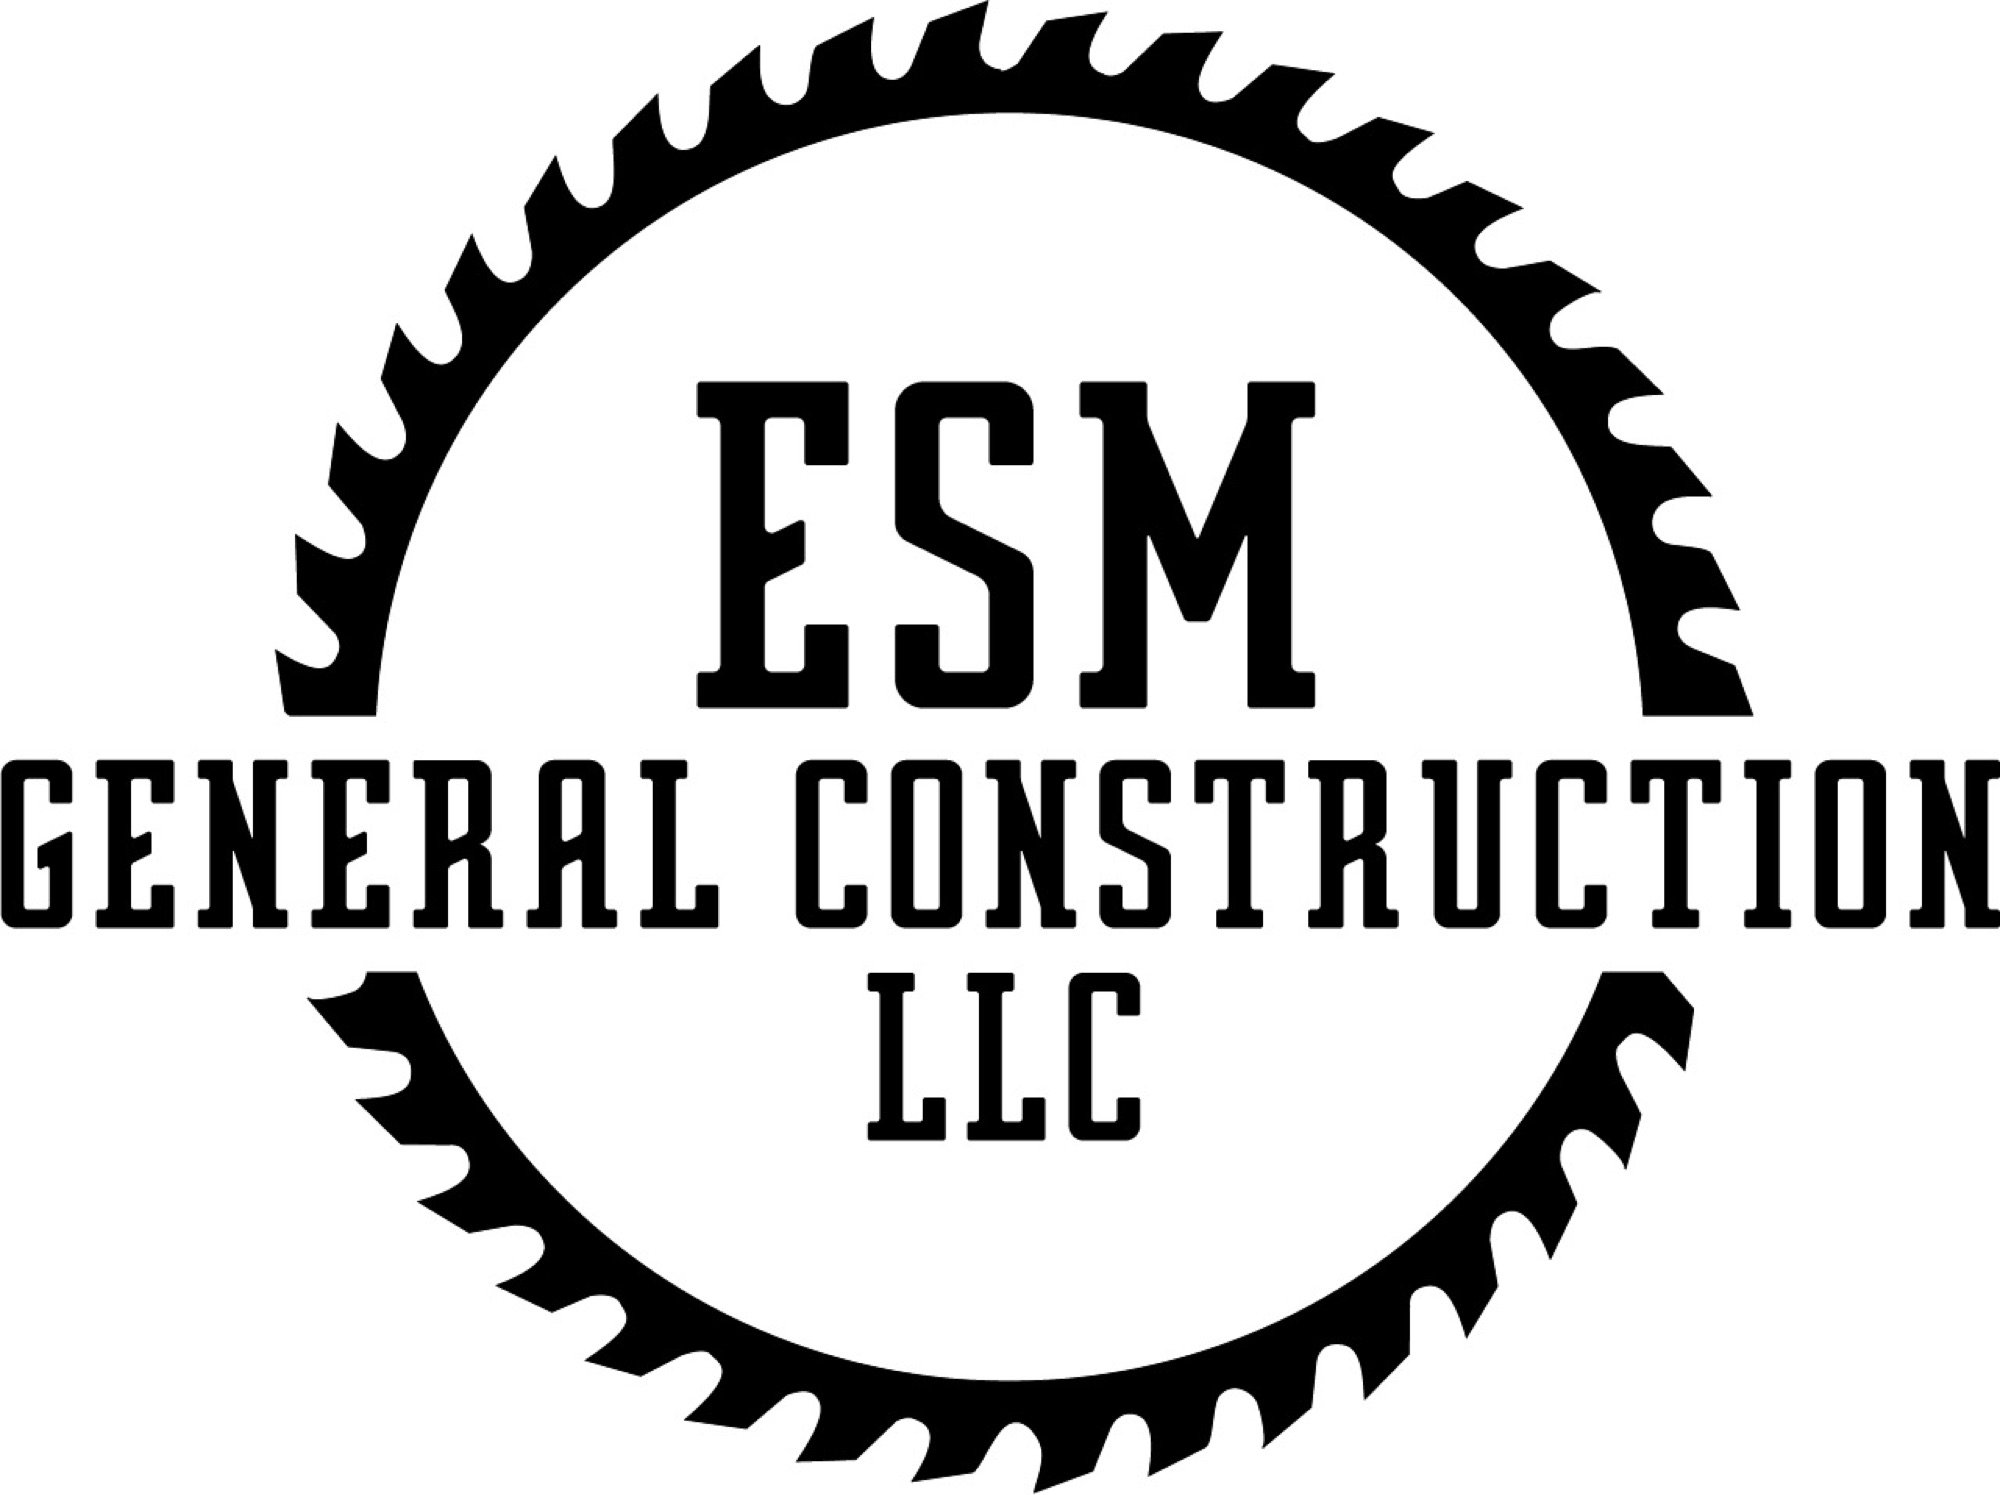 ESM General Construction Logo